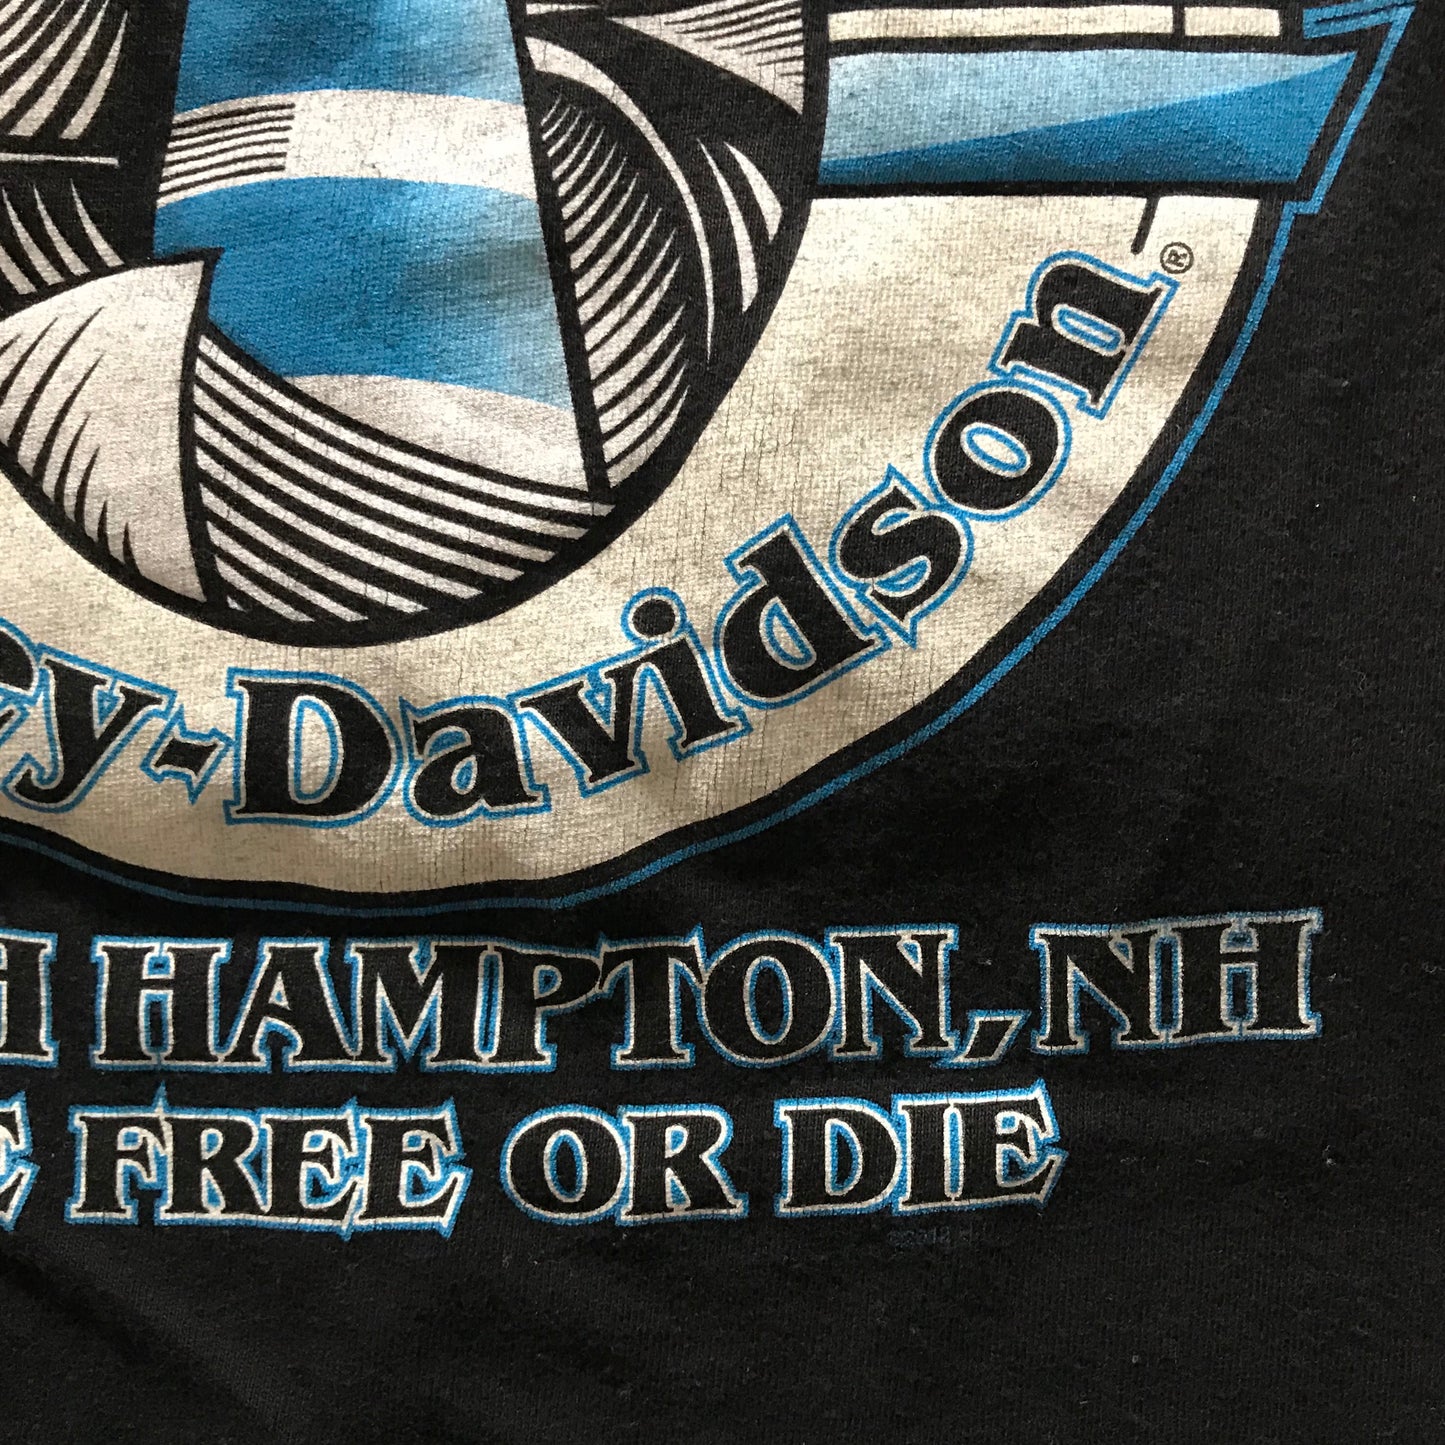 T-shirt with Harley Davidson Bag